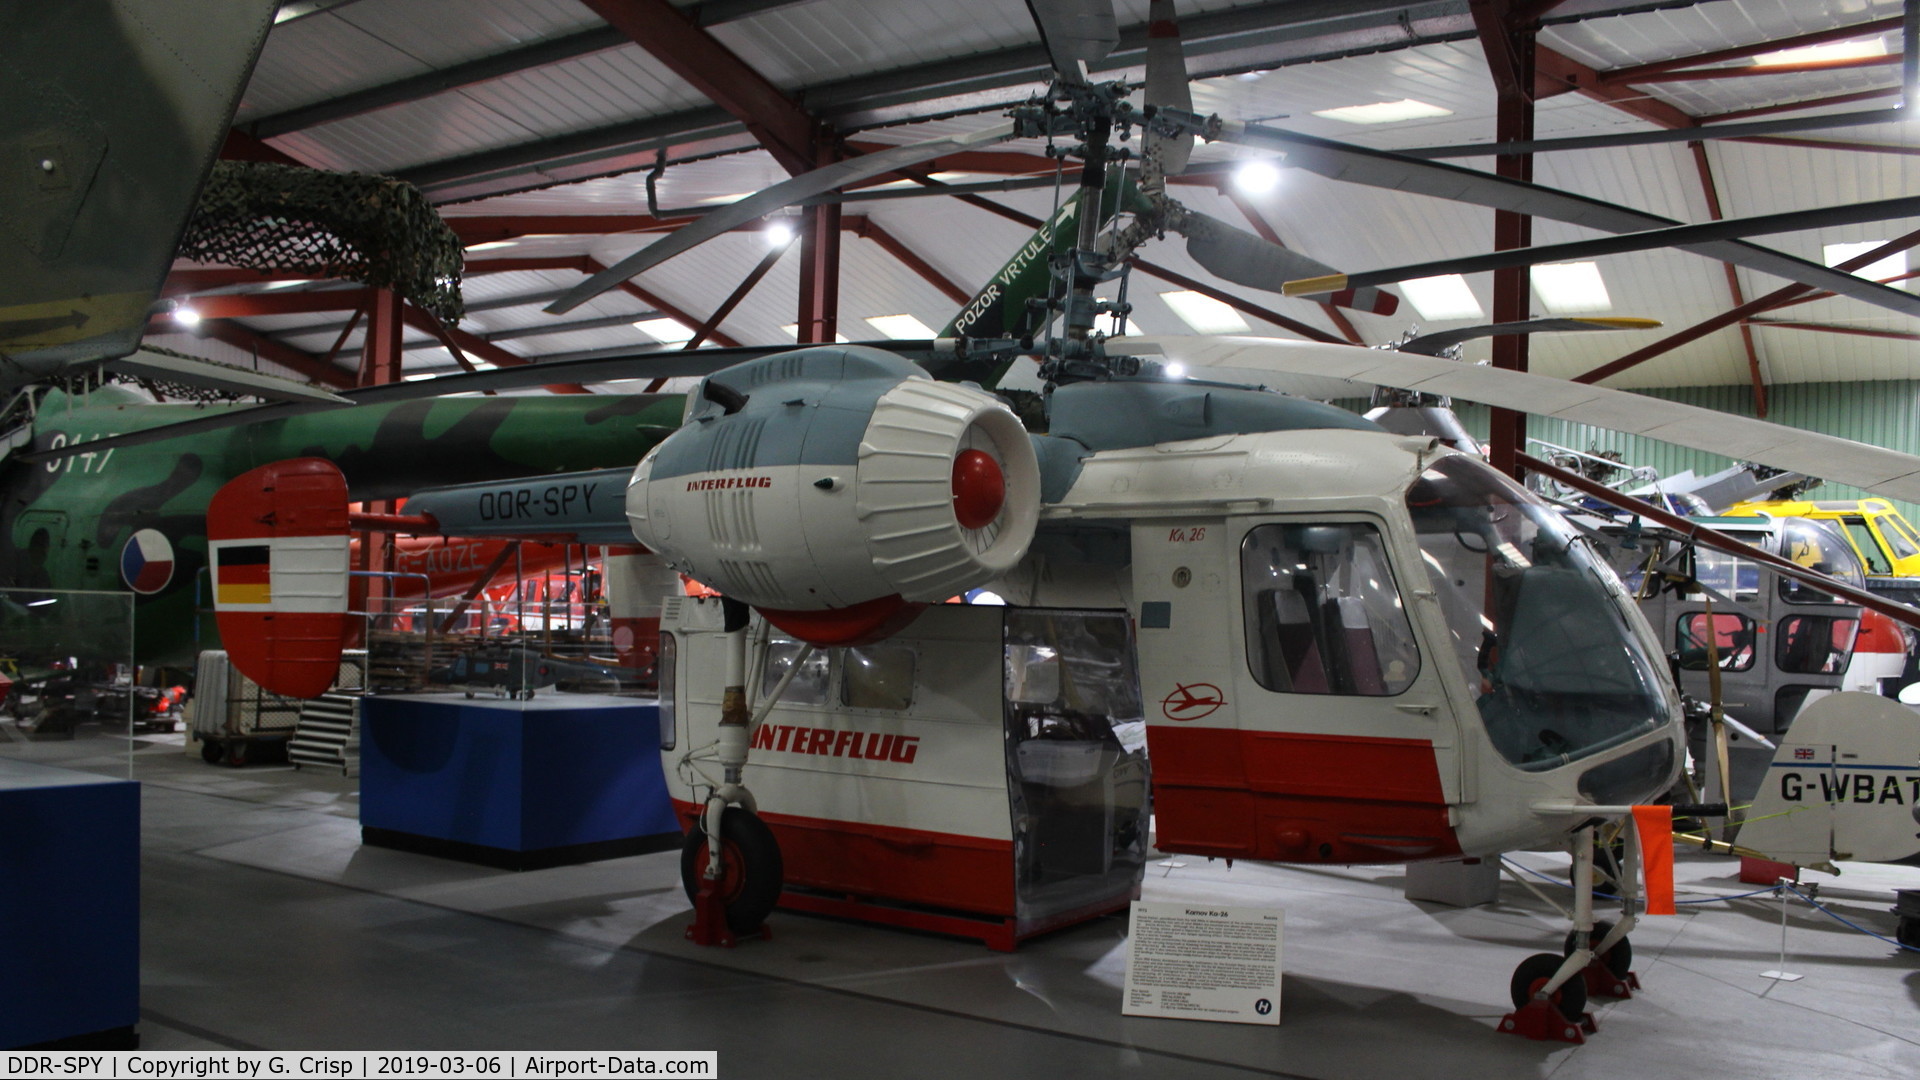 DDR-SPY, 1973 Kamov Ka-26 Hoodlum C/N 7001309, The Helicopter Museum, Weston-Super-Mare, UK